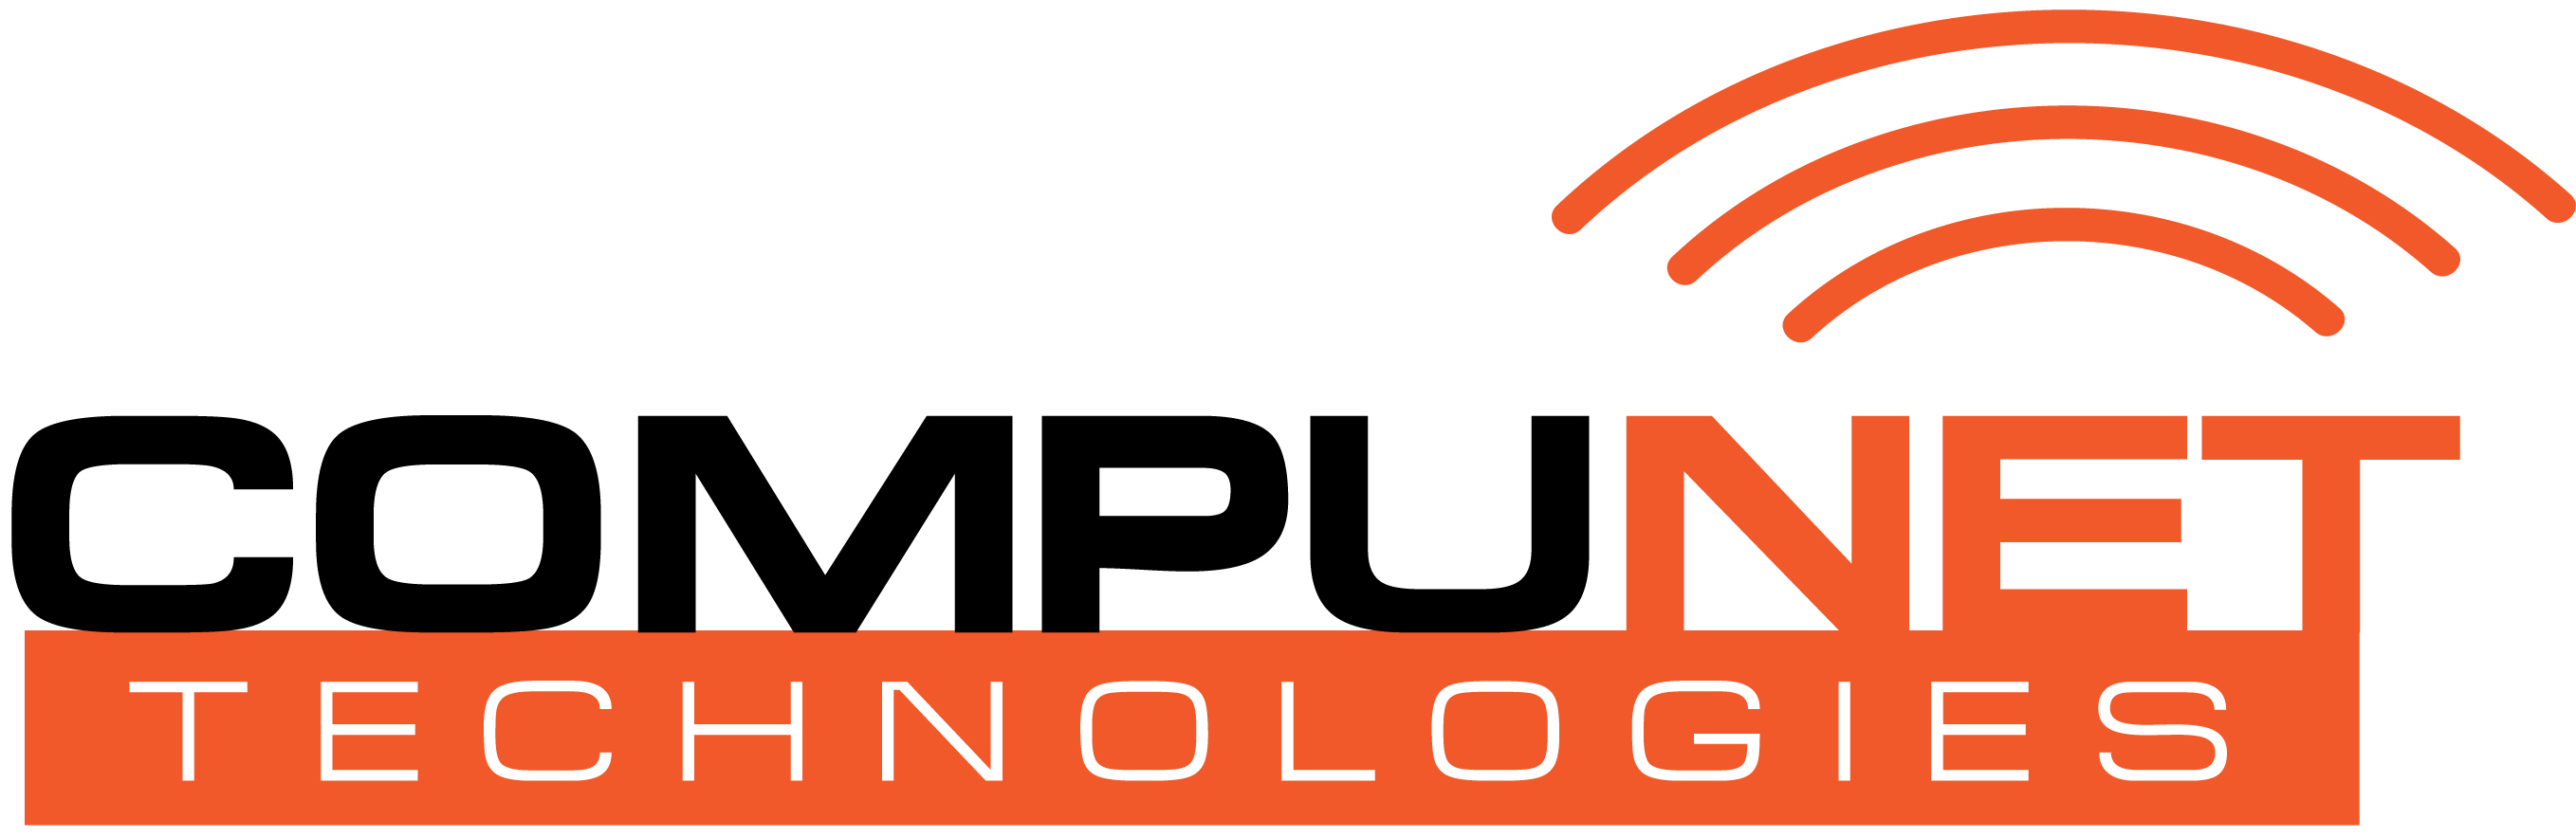 Compunet Logo - Compunet Technologies